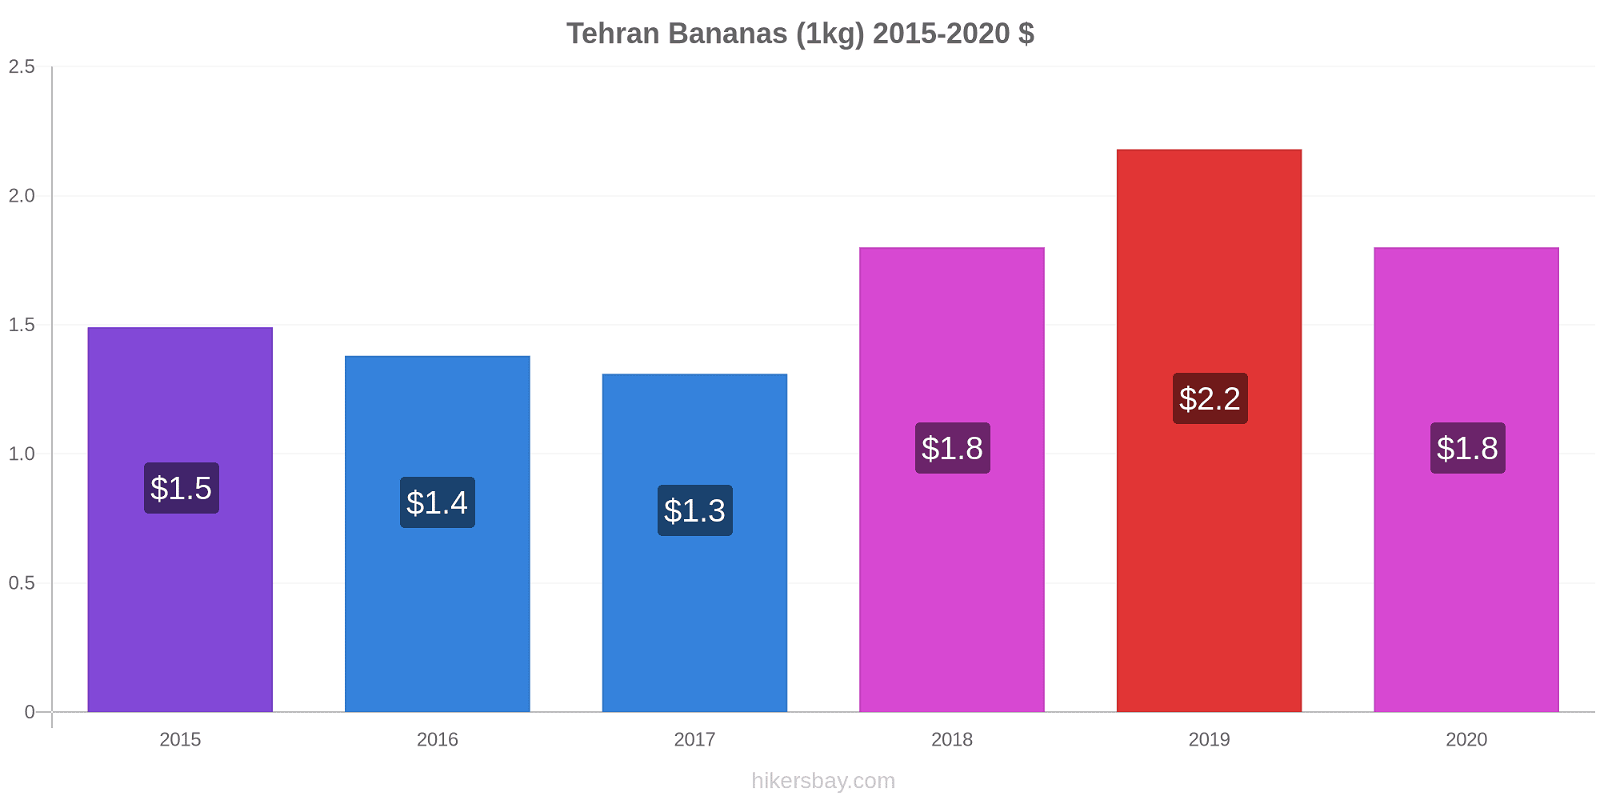 Tehran price changes Bananas (1kg) hikersbay.com